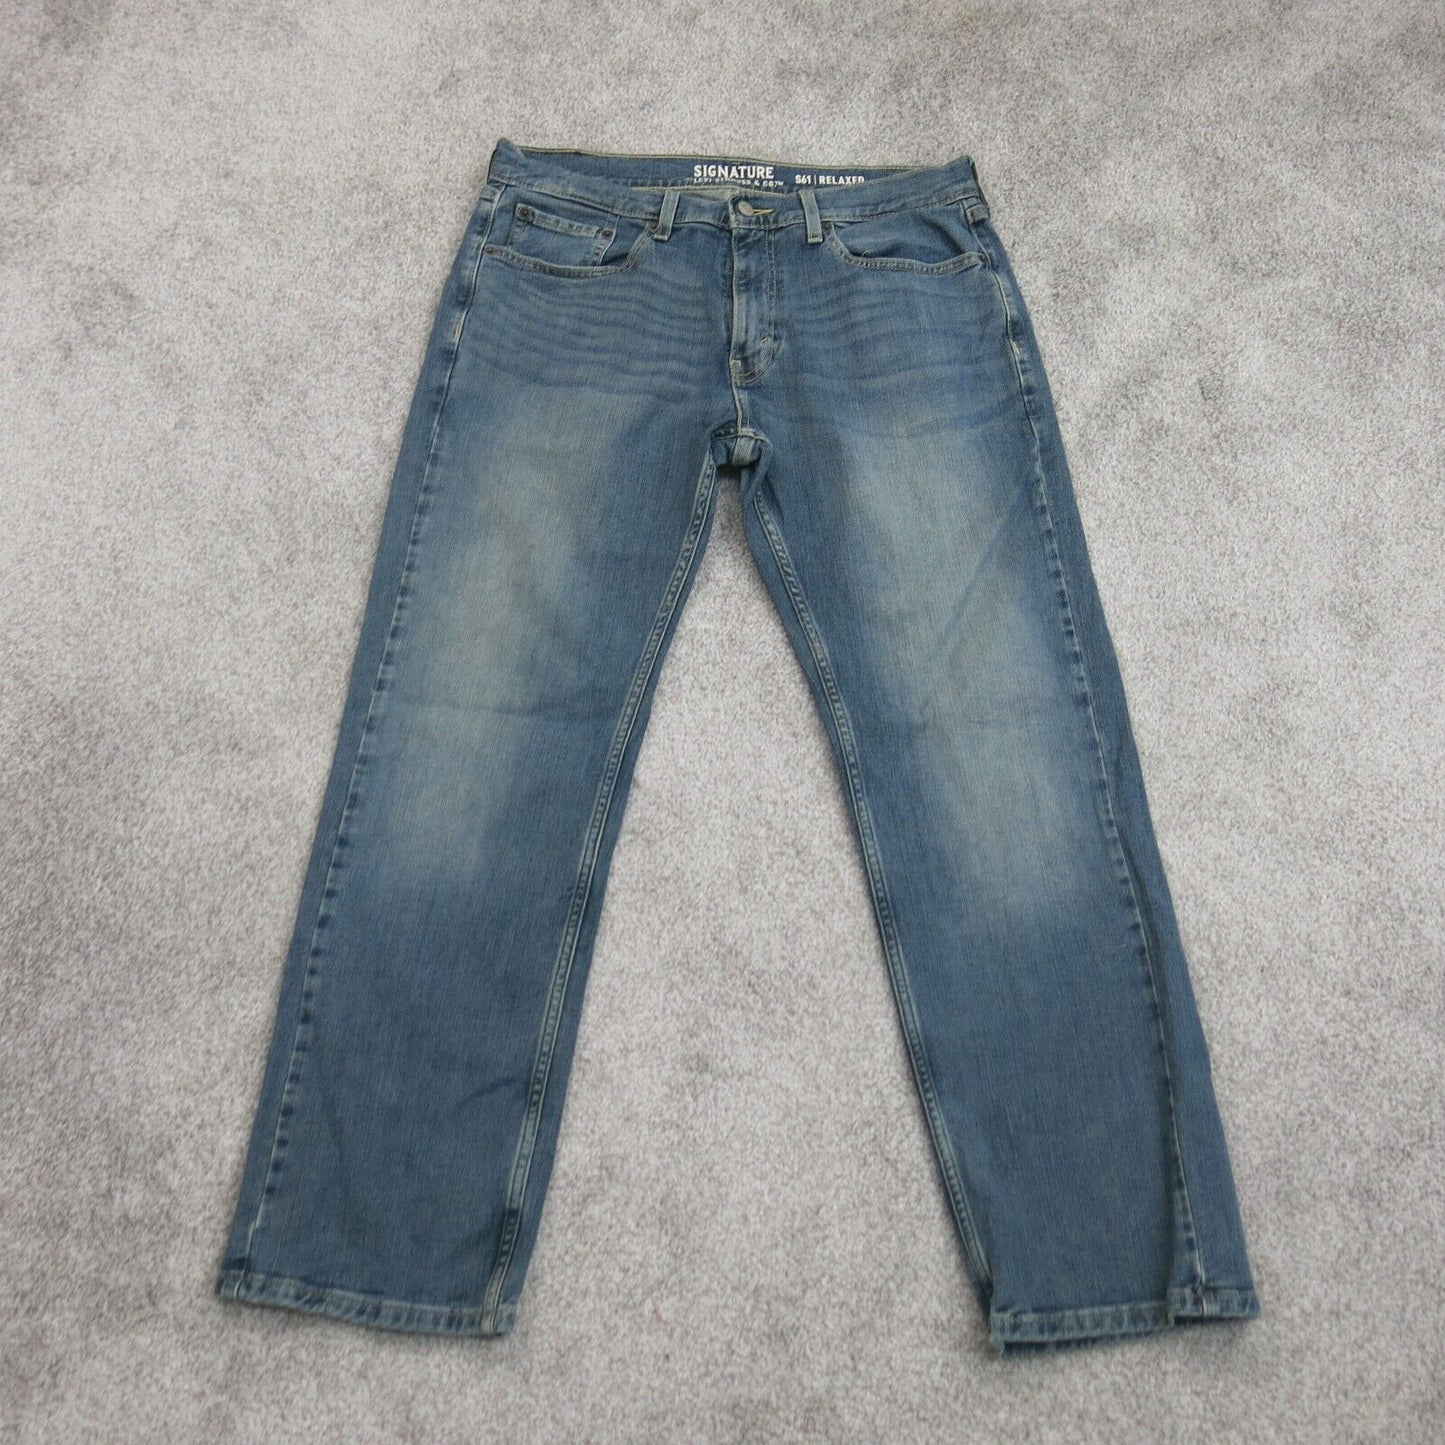 Signature By Levis Men Straight Leg Jeans Denim Relaxed Fit Cotton Blue W32xL30